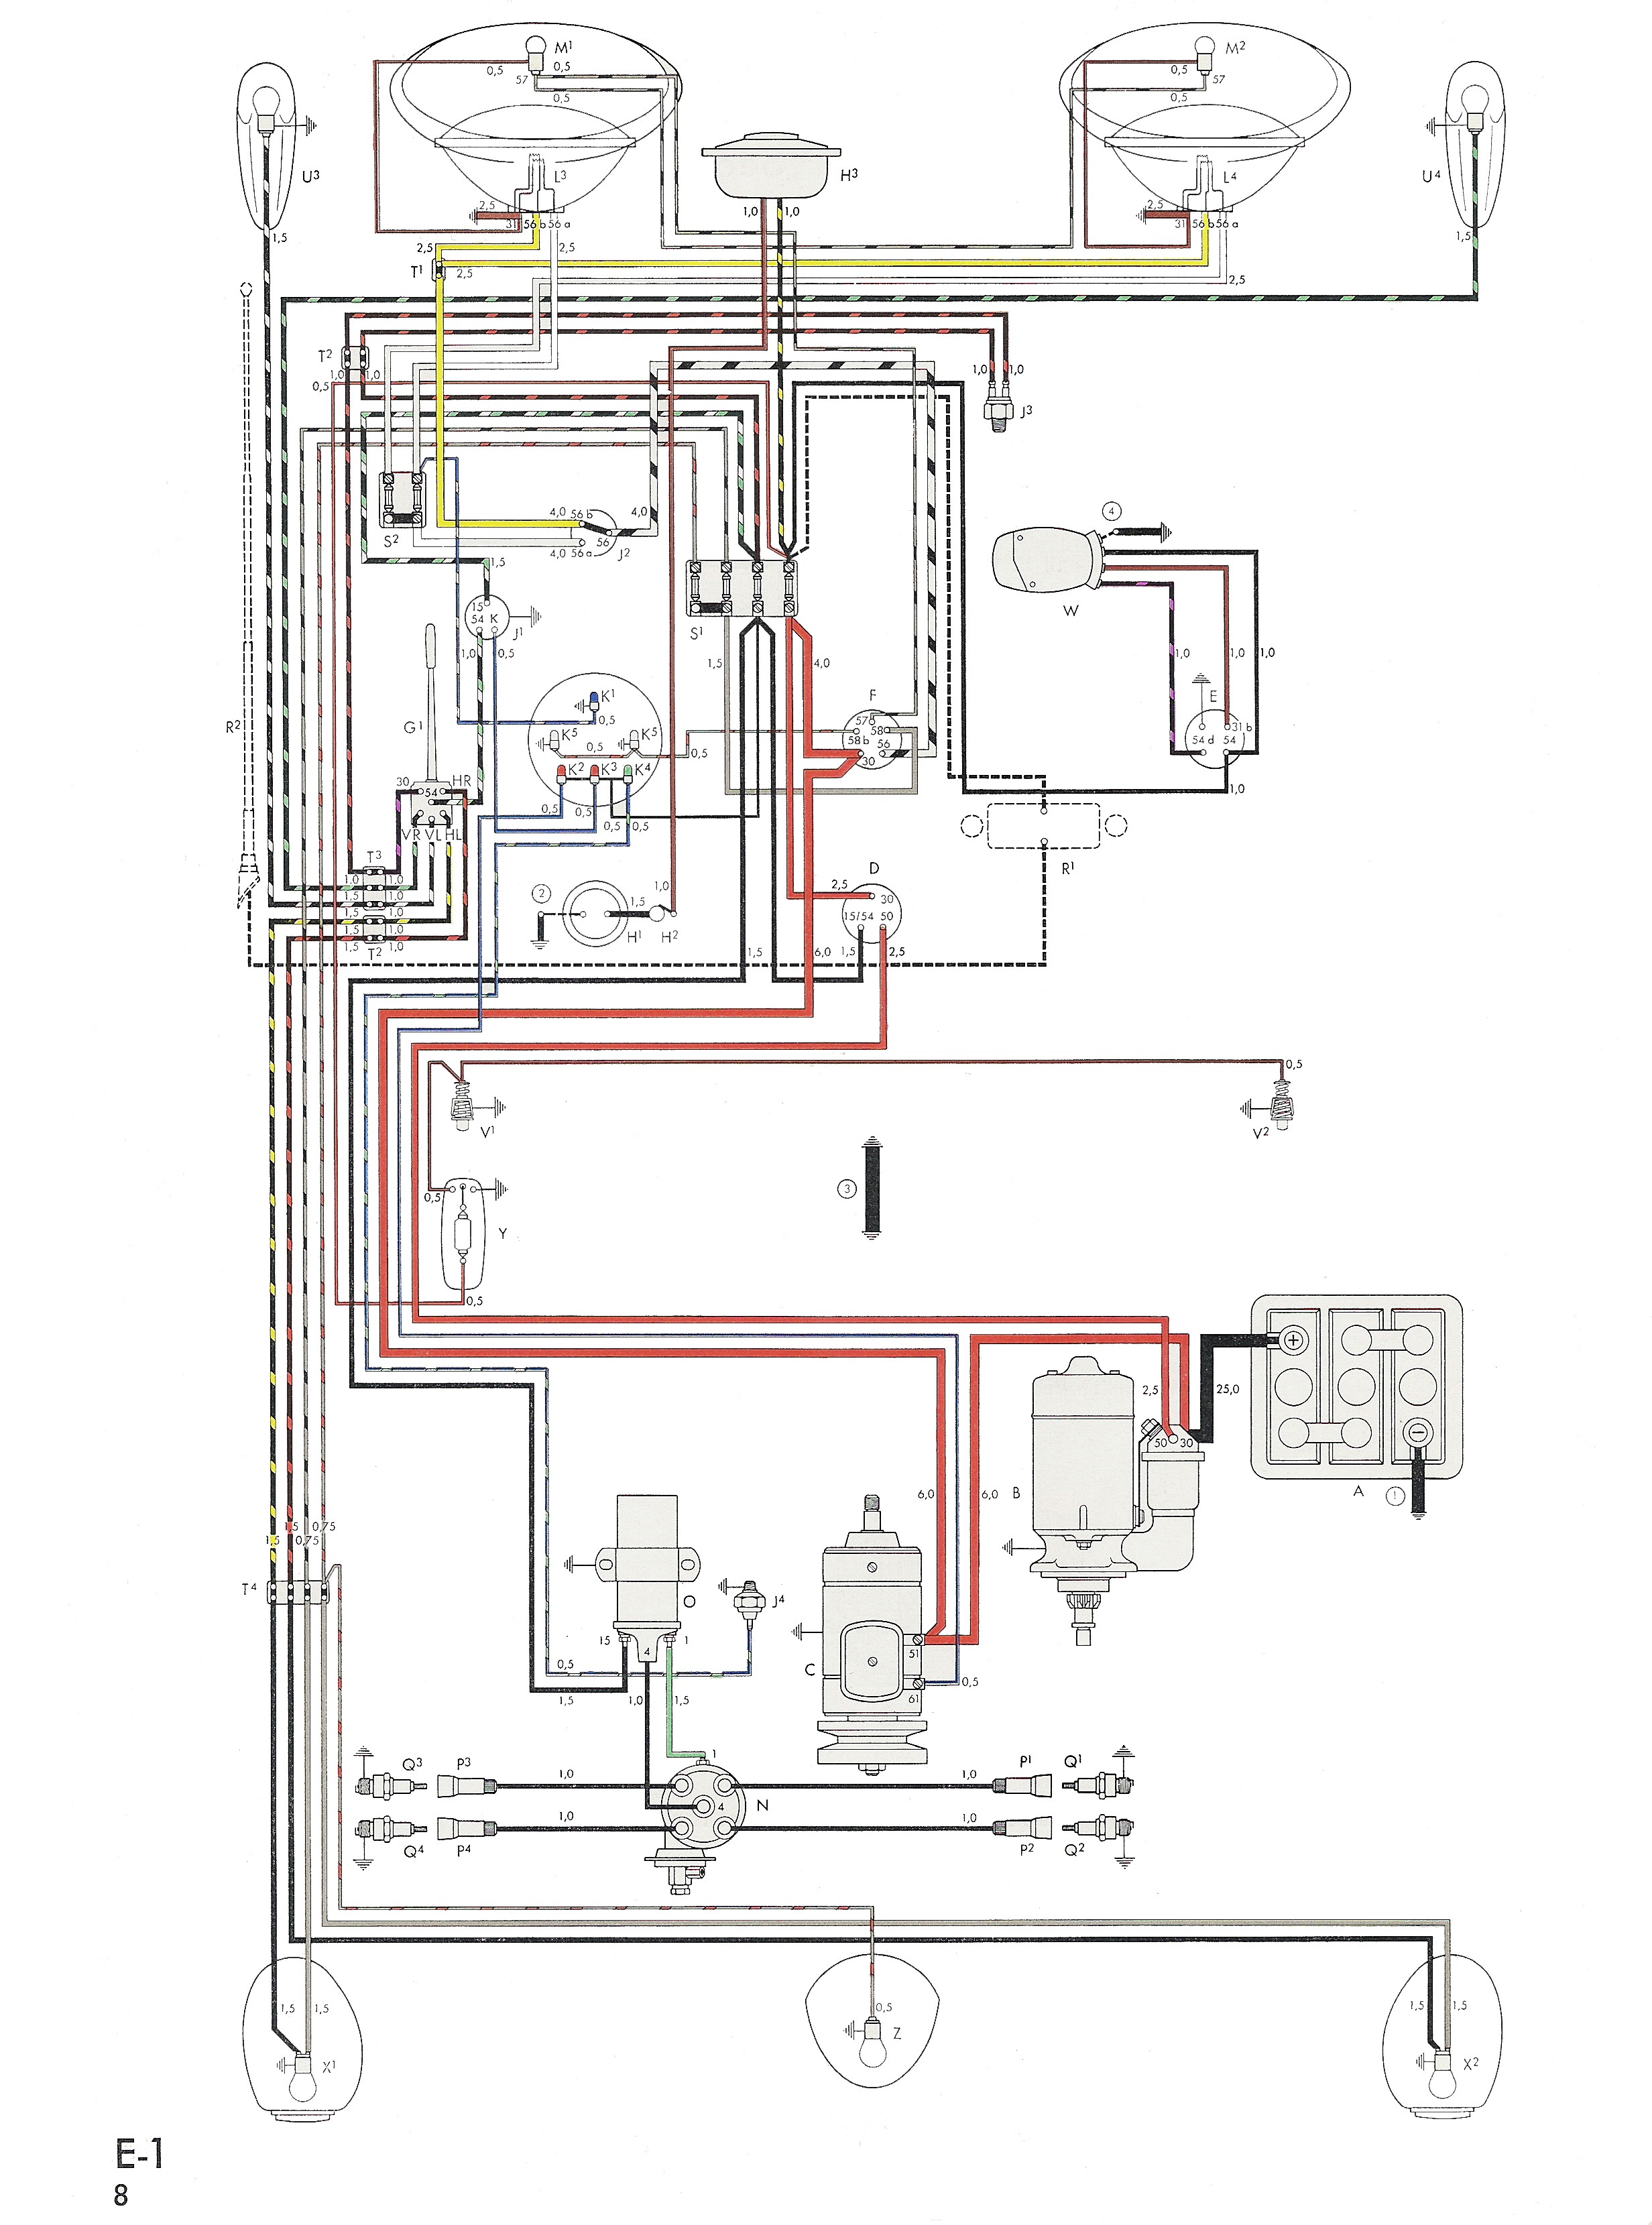 Vw Jetta Engine Diagram 58 Vw Alternator Wiring Another Blog About Wiring Diagram • Of Vw Jetta Engine Diagram